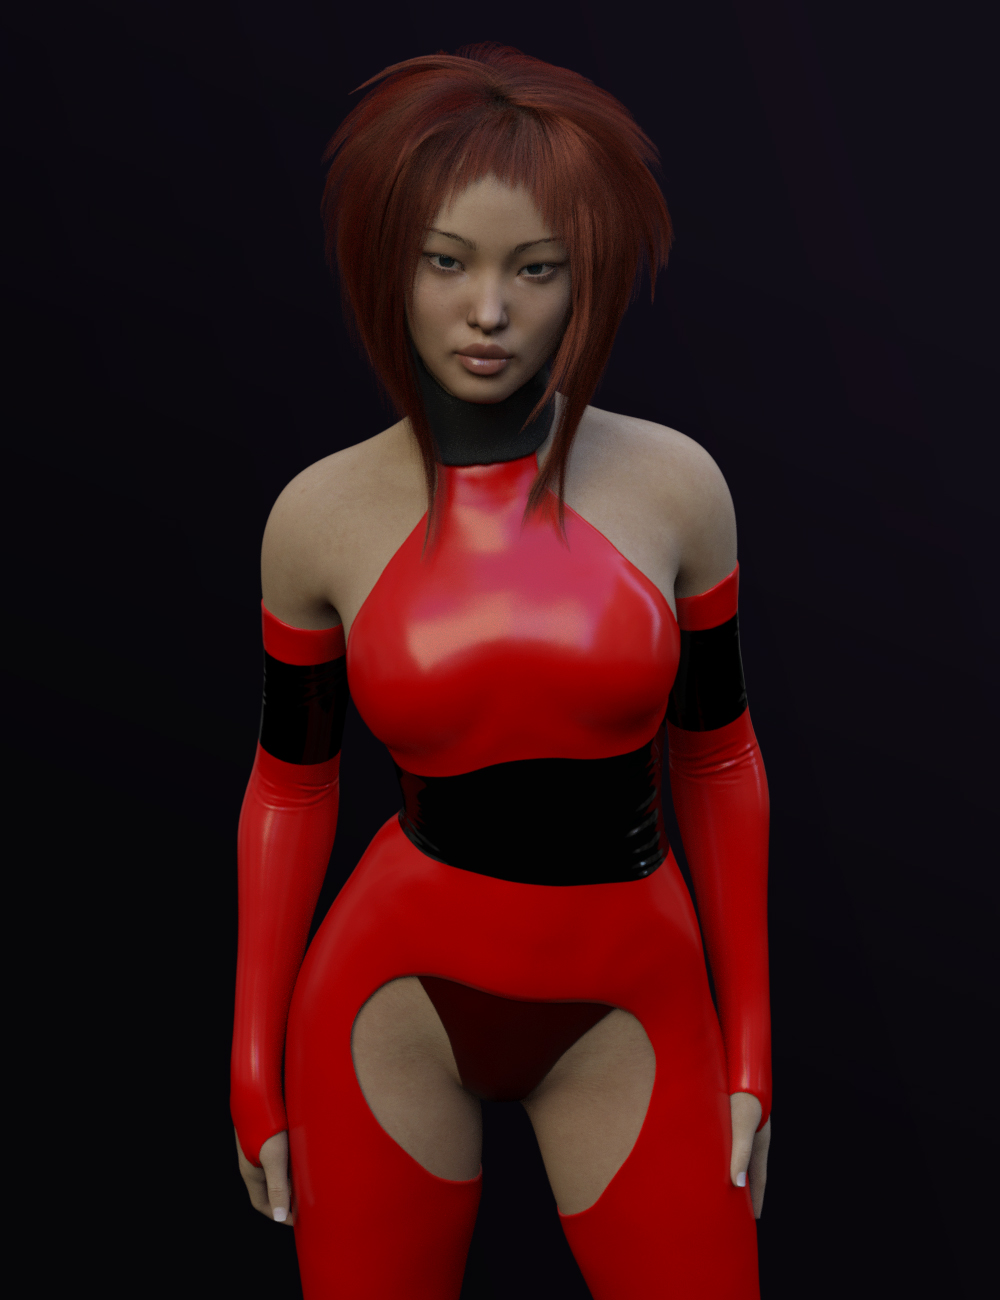 Soo A Hair for Genesis 8.1 Females by: Lou, 3D Models by Daz 3D